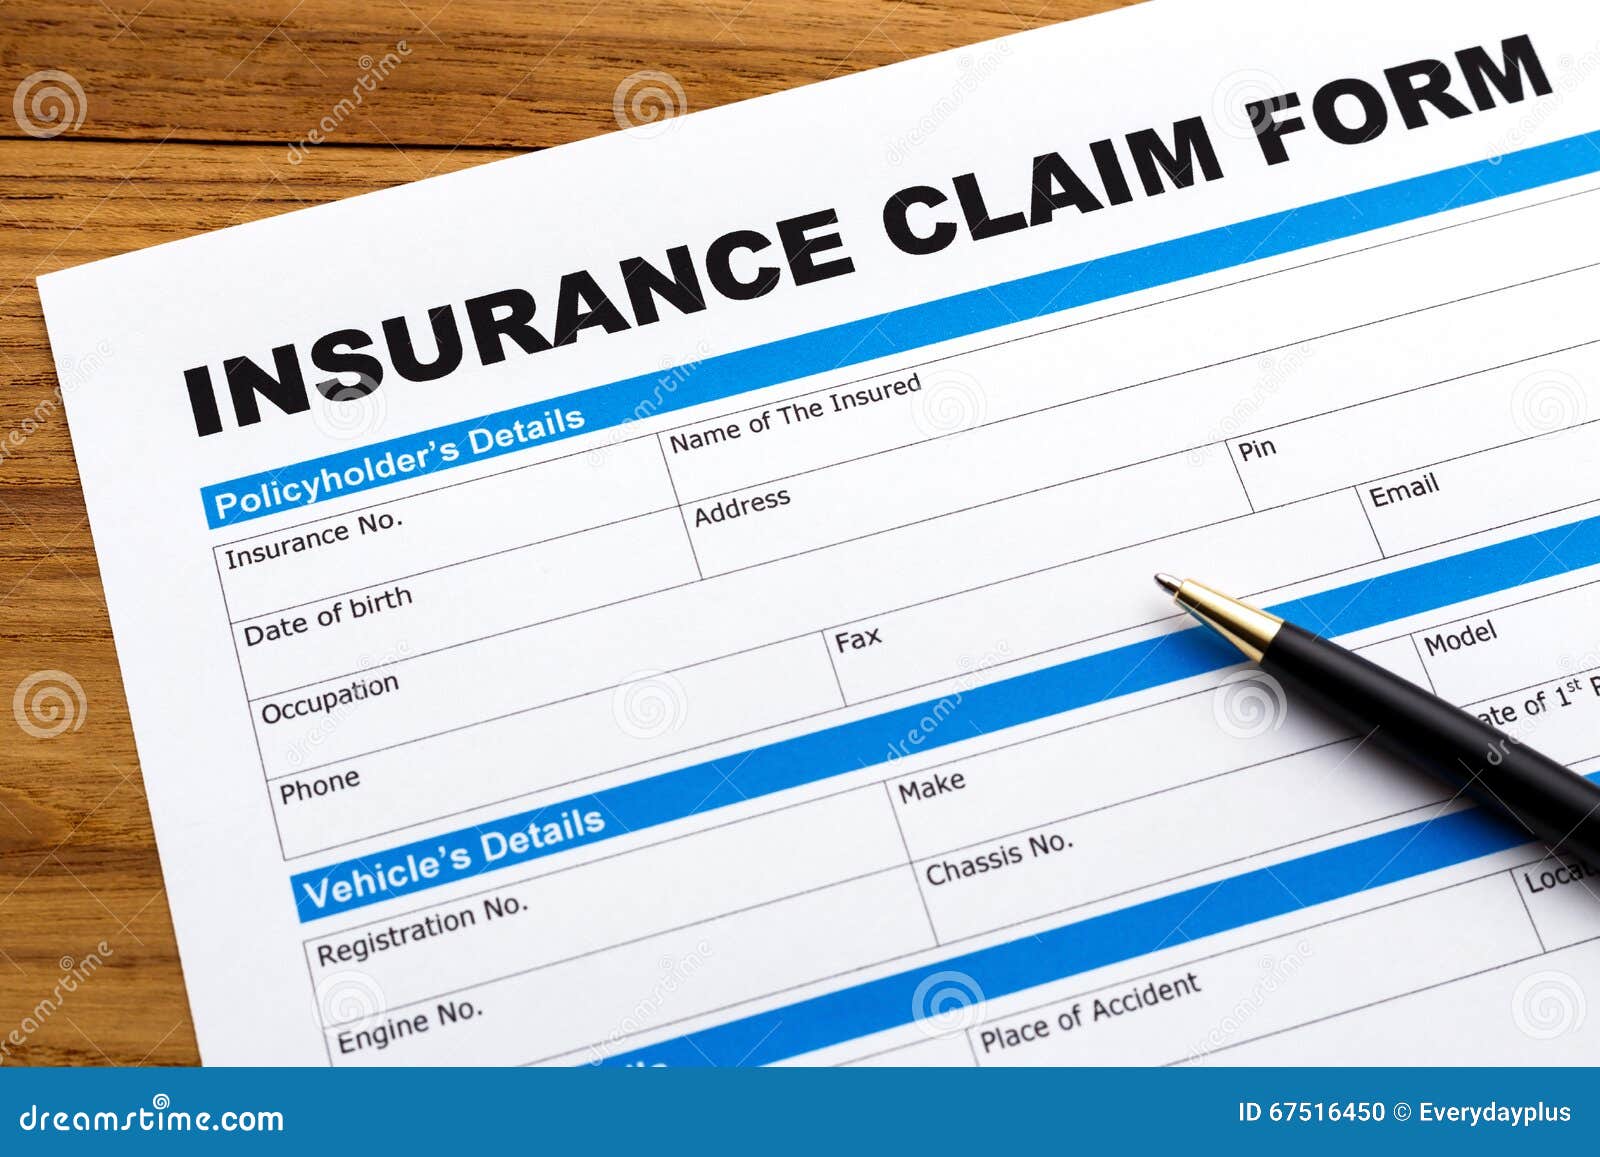 Insurance claim form stock photo. Image of risk, premium - 67516450